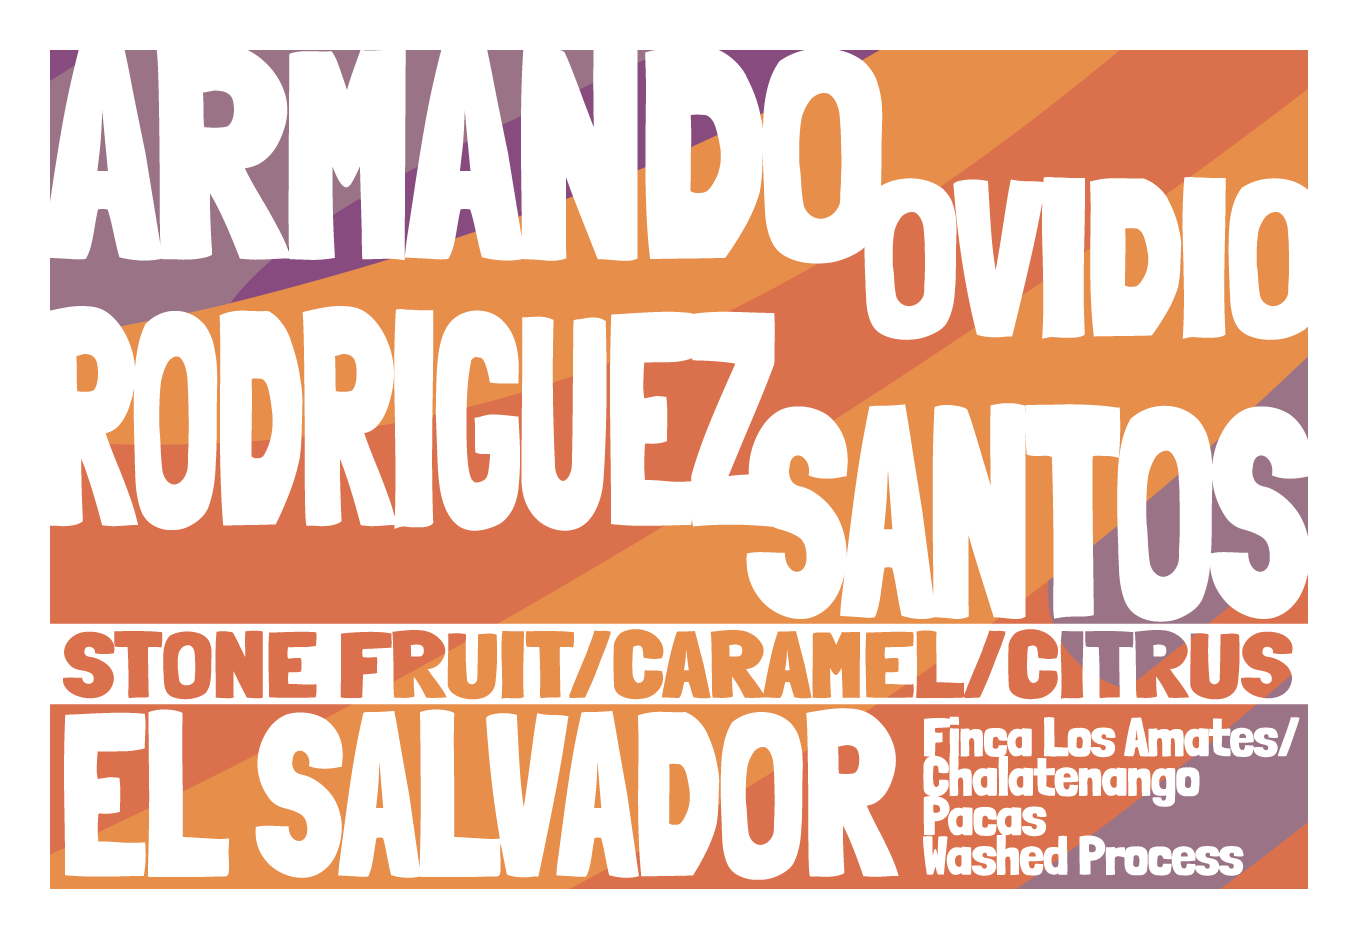 El Salvador - Armando Ovidio Rodriguez AA - Washed